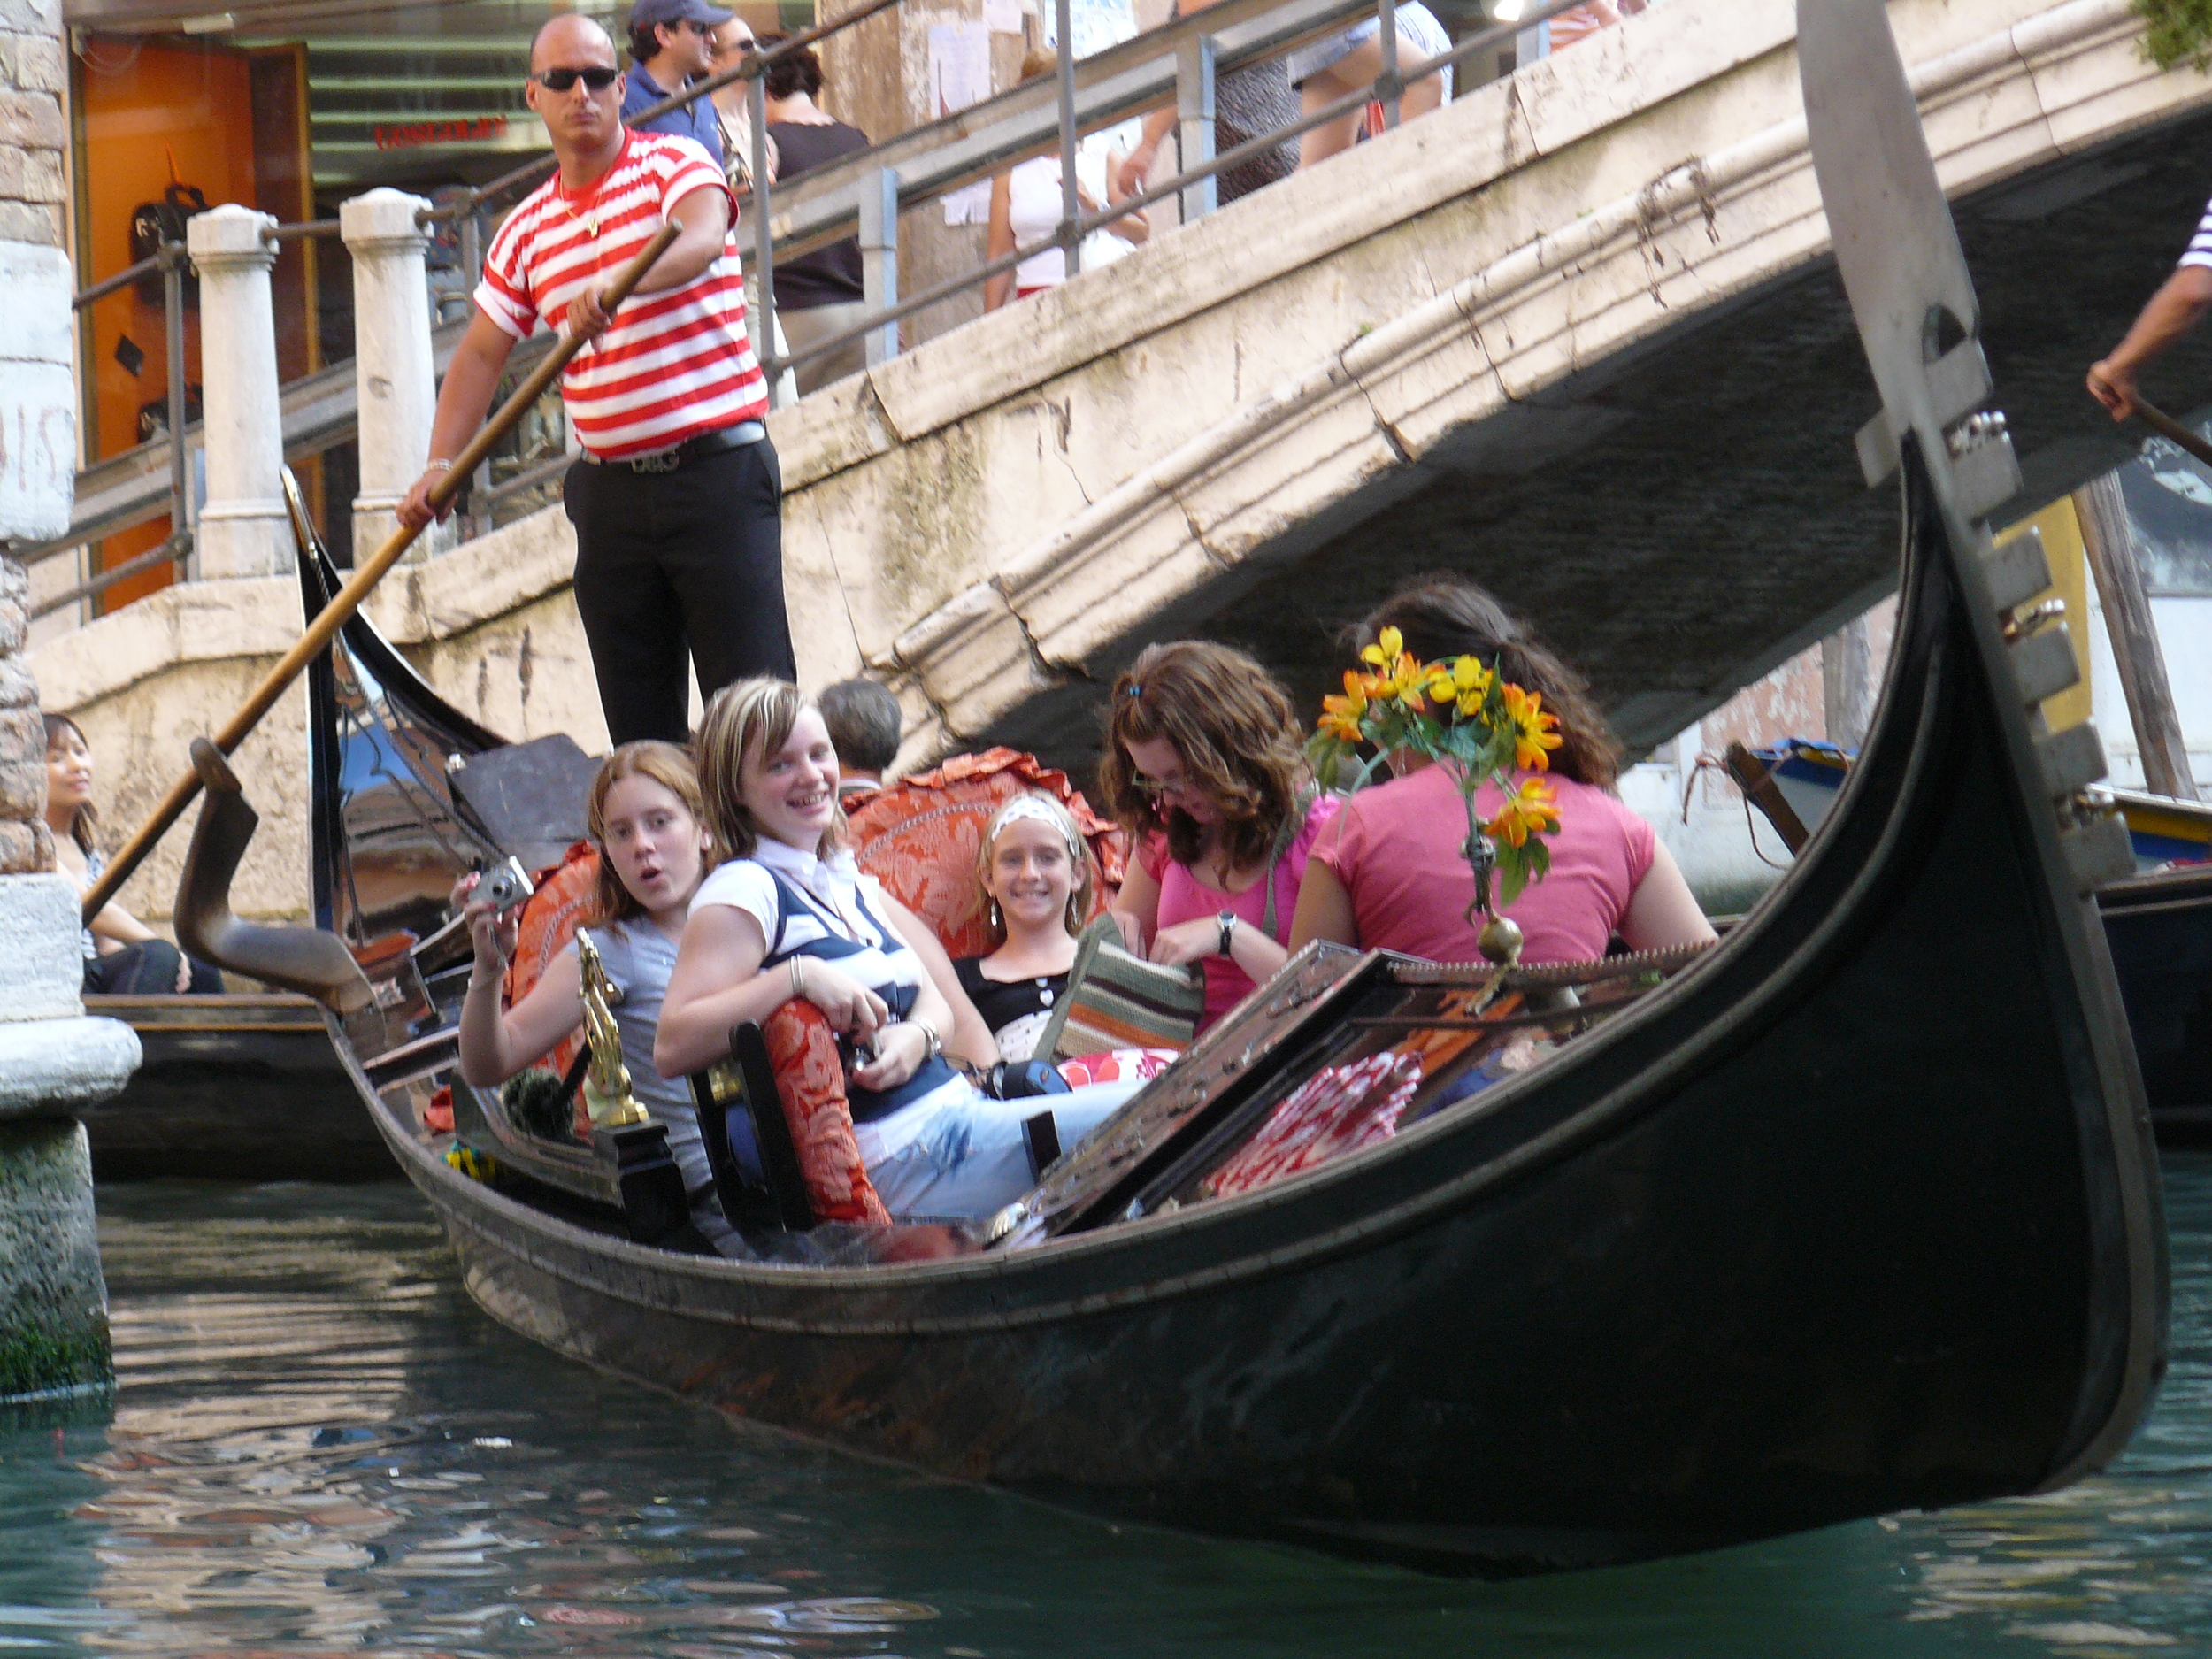  Gondola ride in Venice, Italy 